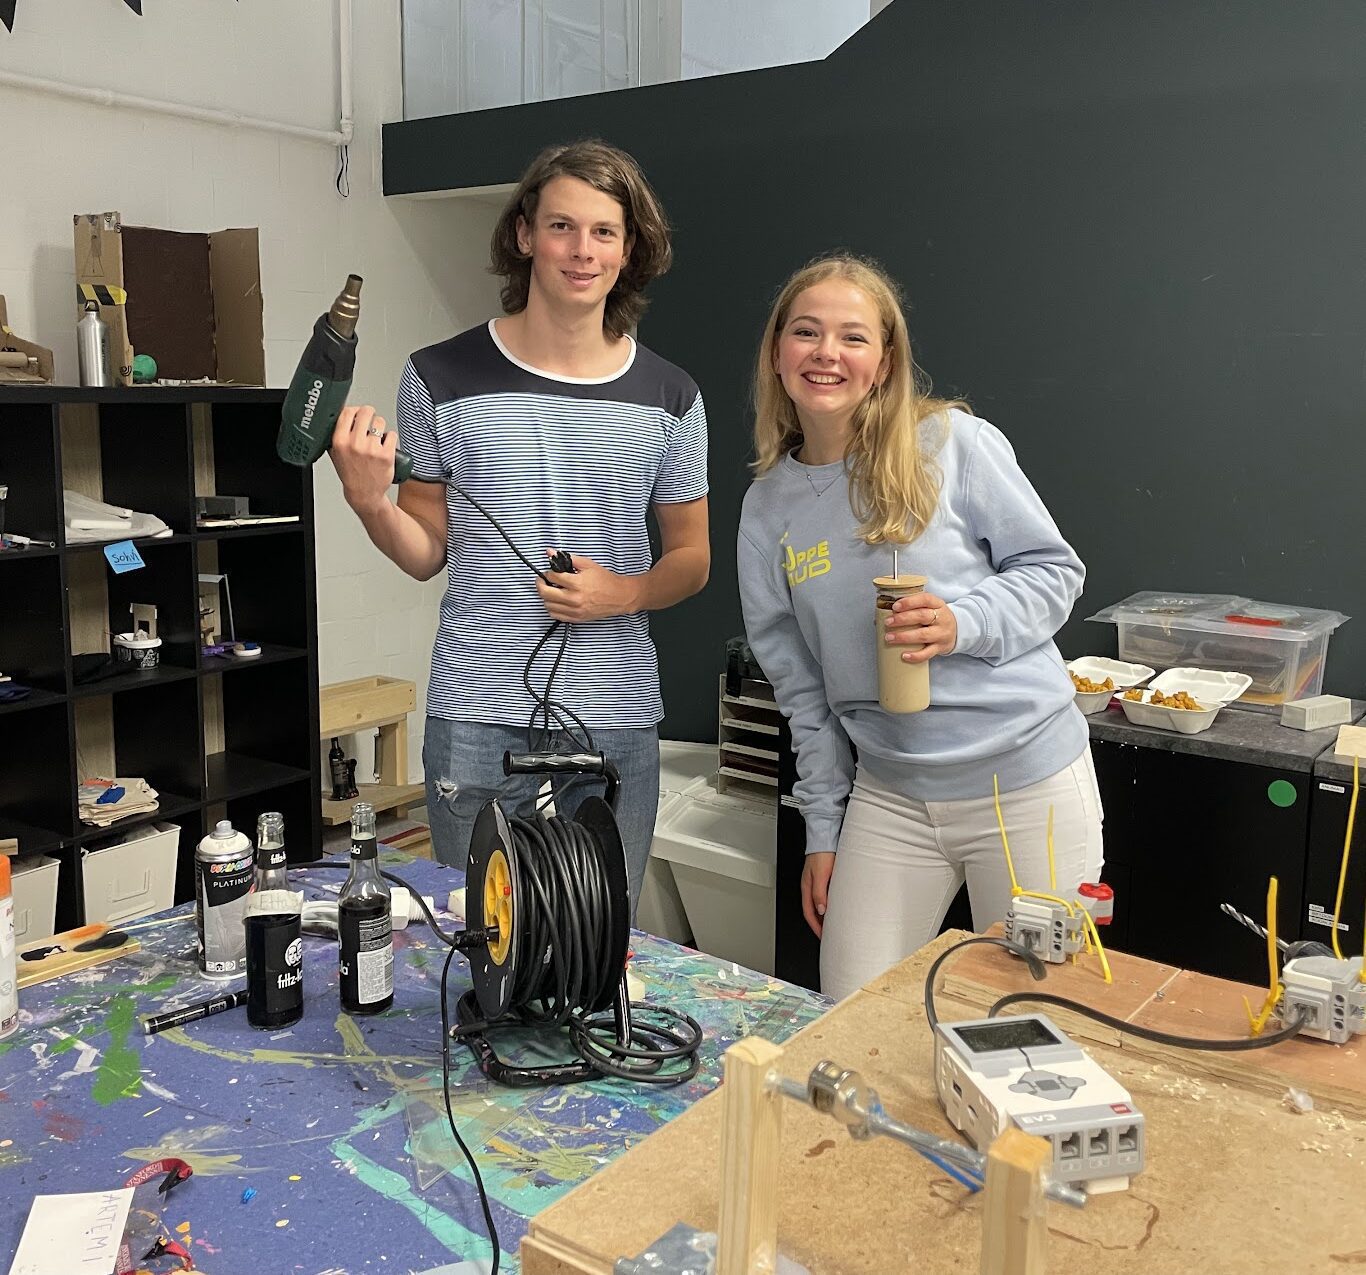 Hüppelaud Summer School calls for young entrepreneurs